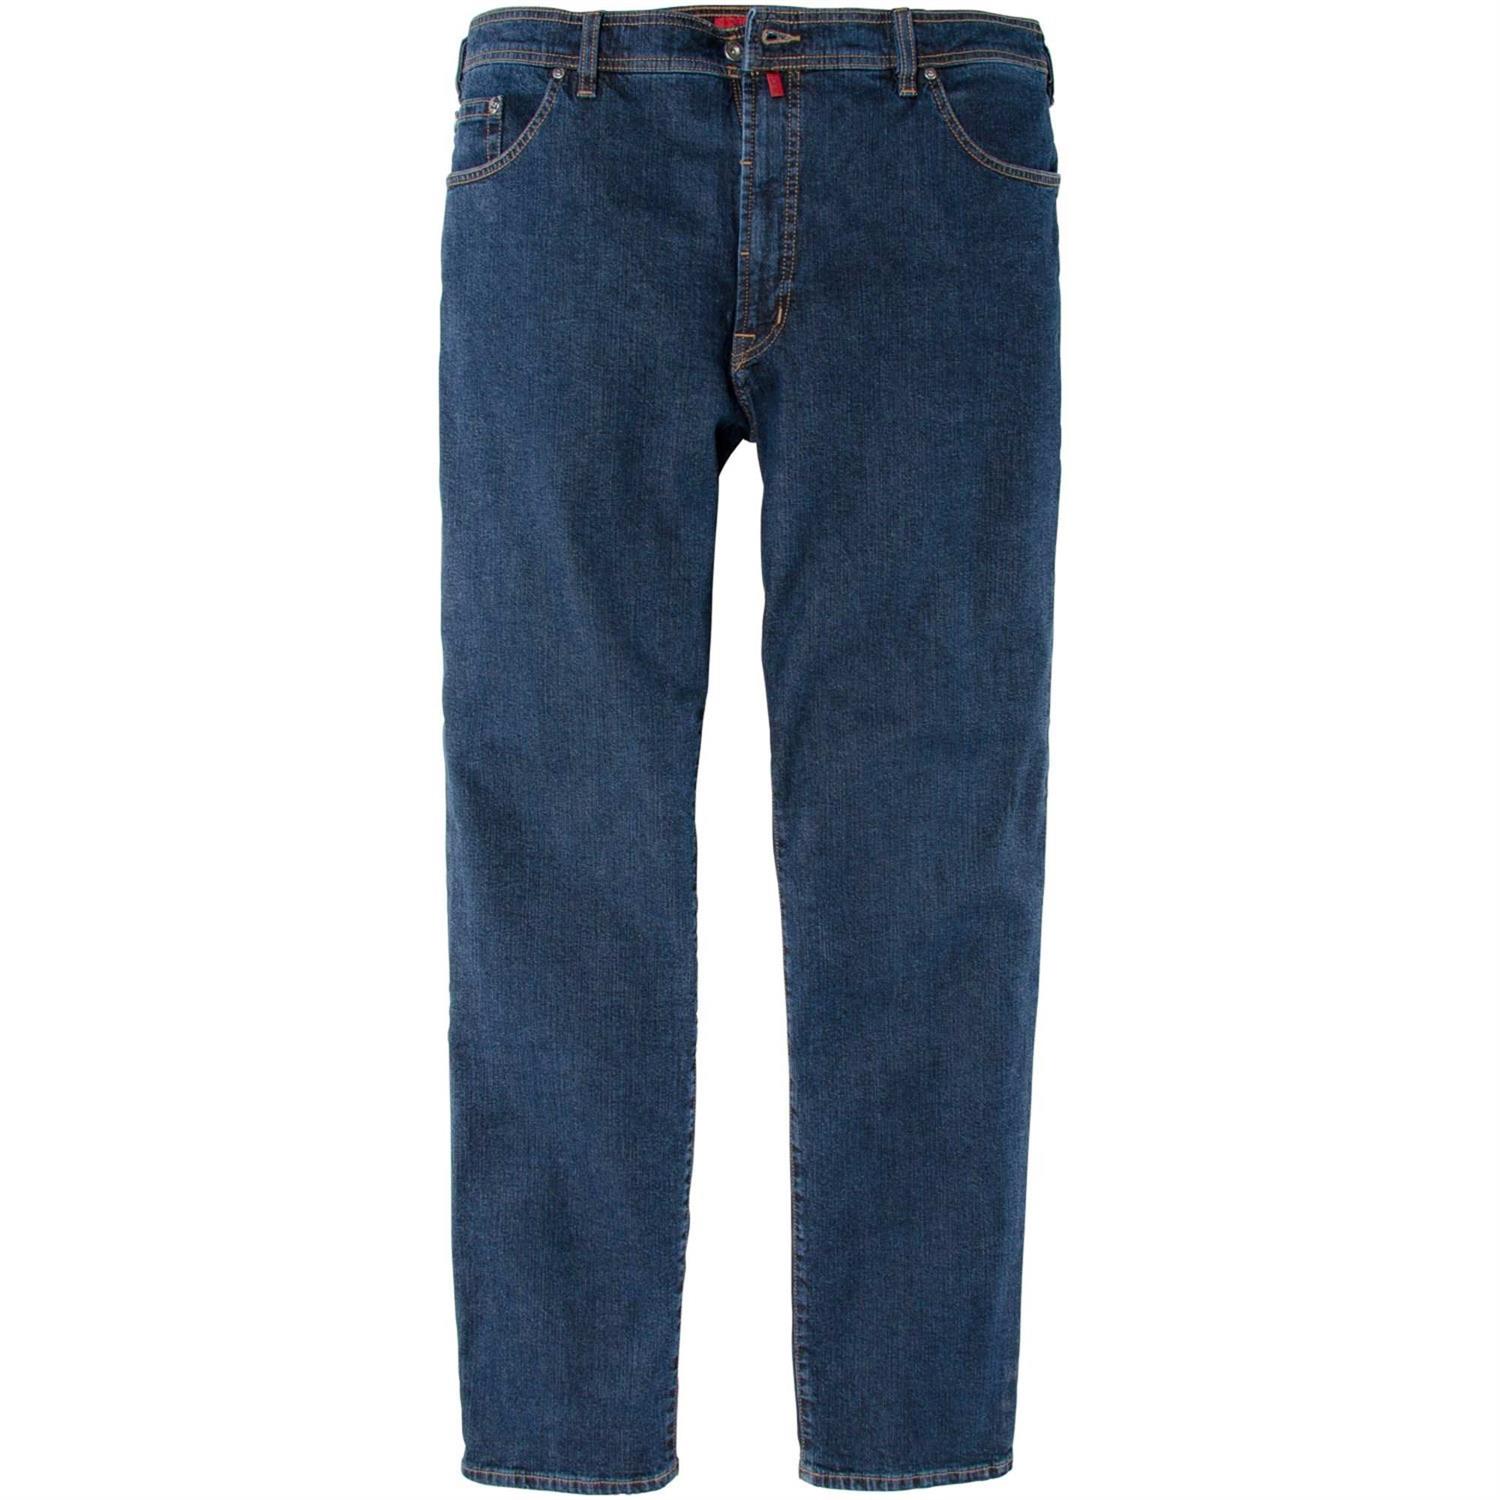 Pierre Cardin HE 5 Pocket leichte Jeans Twill BW Elasthan d.-blau UVP89,99€ NEU 